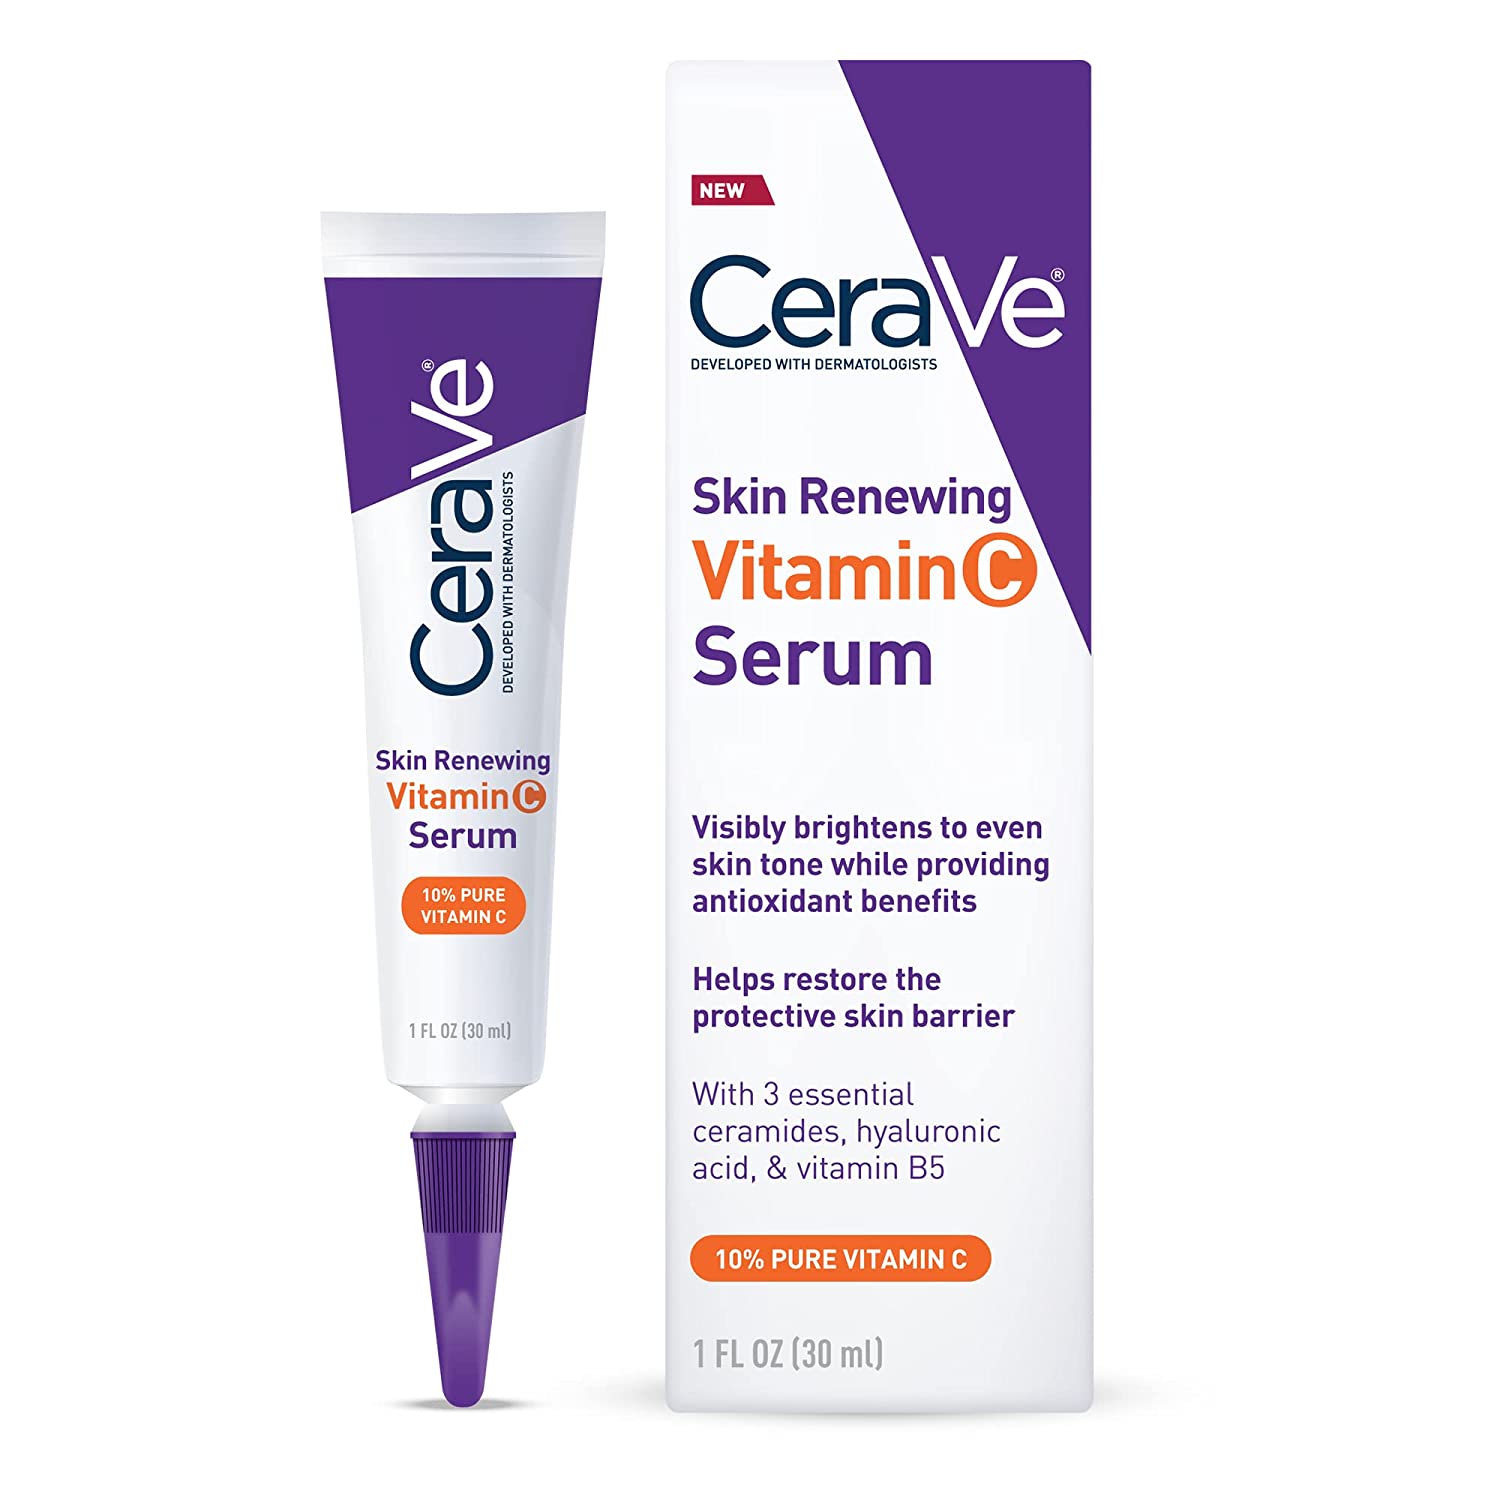 PRE-ORDER Cerave Skin Renewing Vitamin C Serum